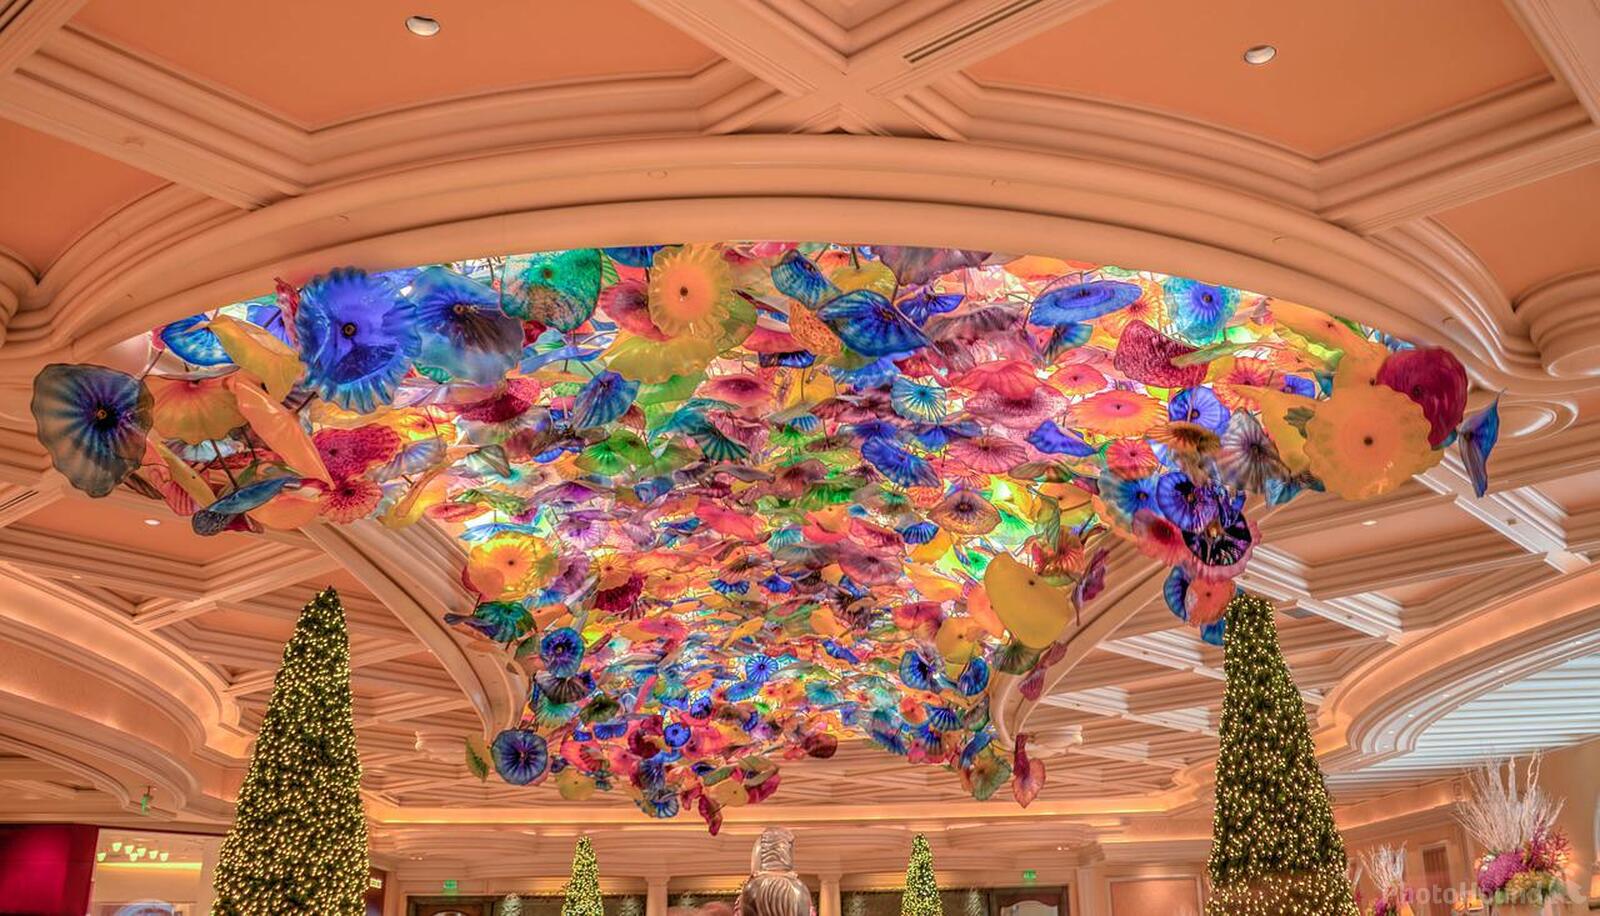 Image of Bellagio Lobby by Team PhotoHound